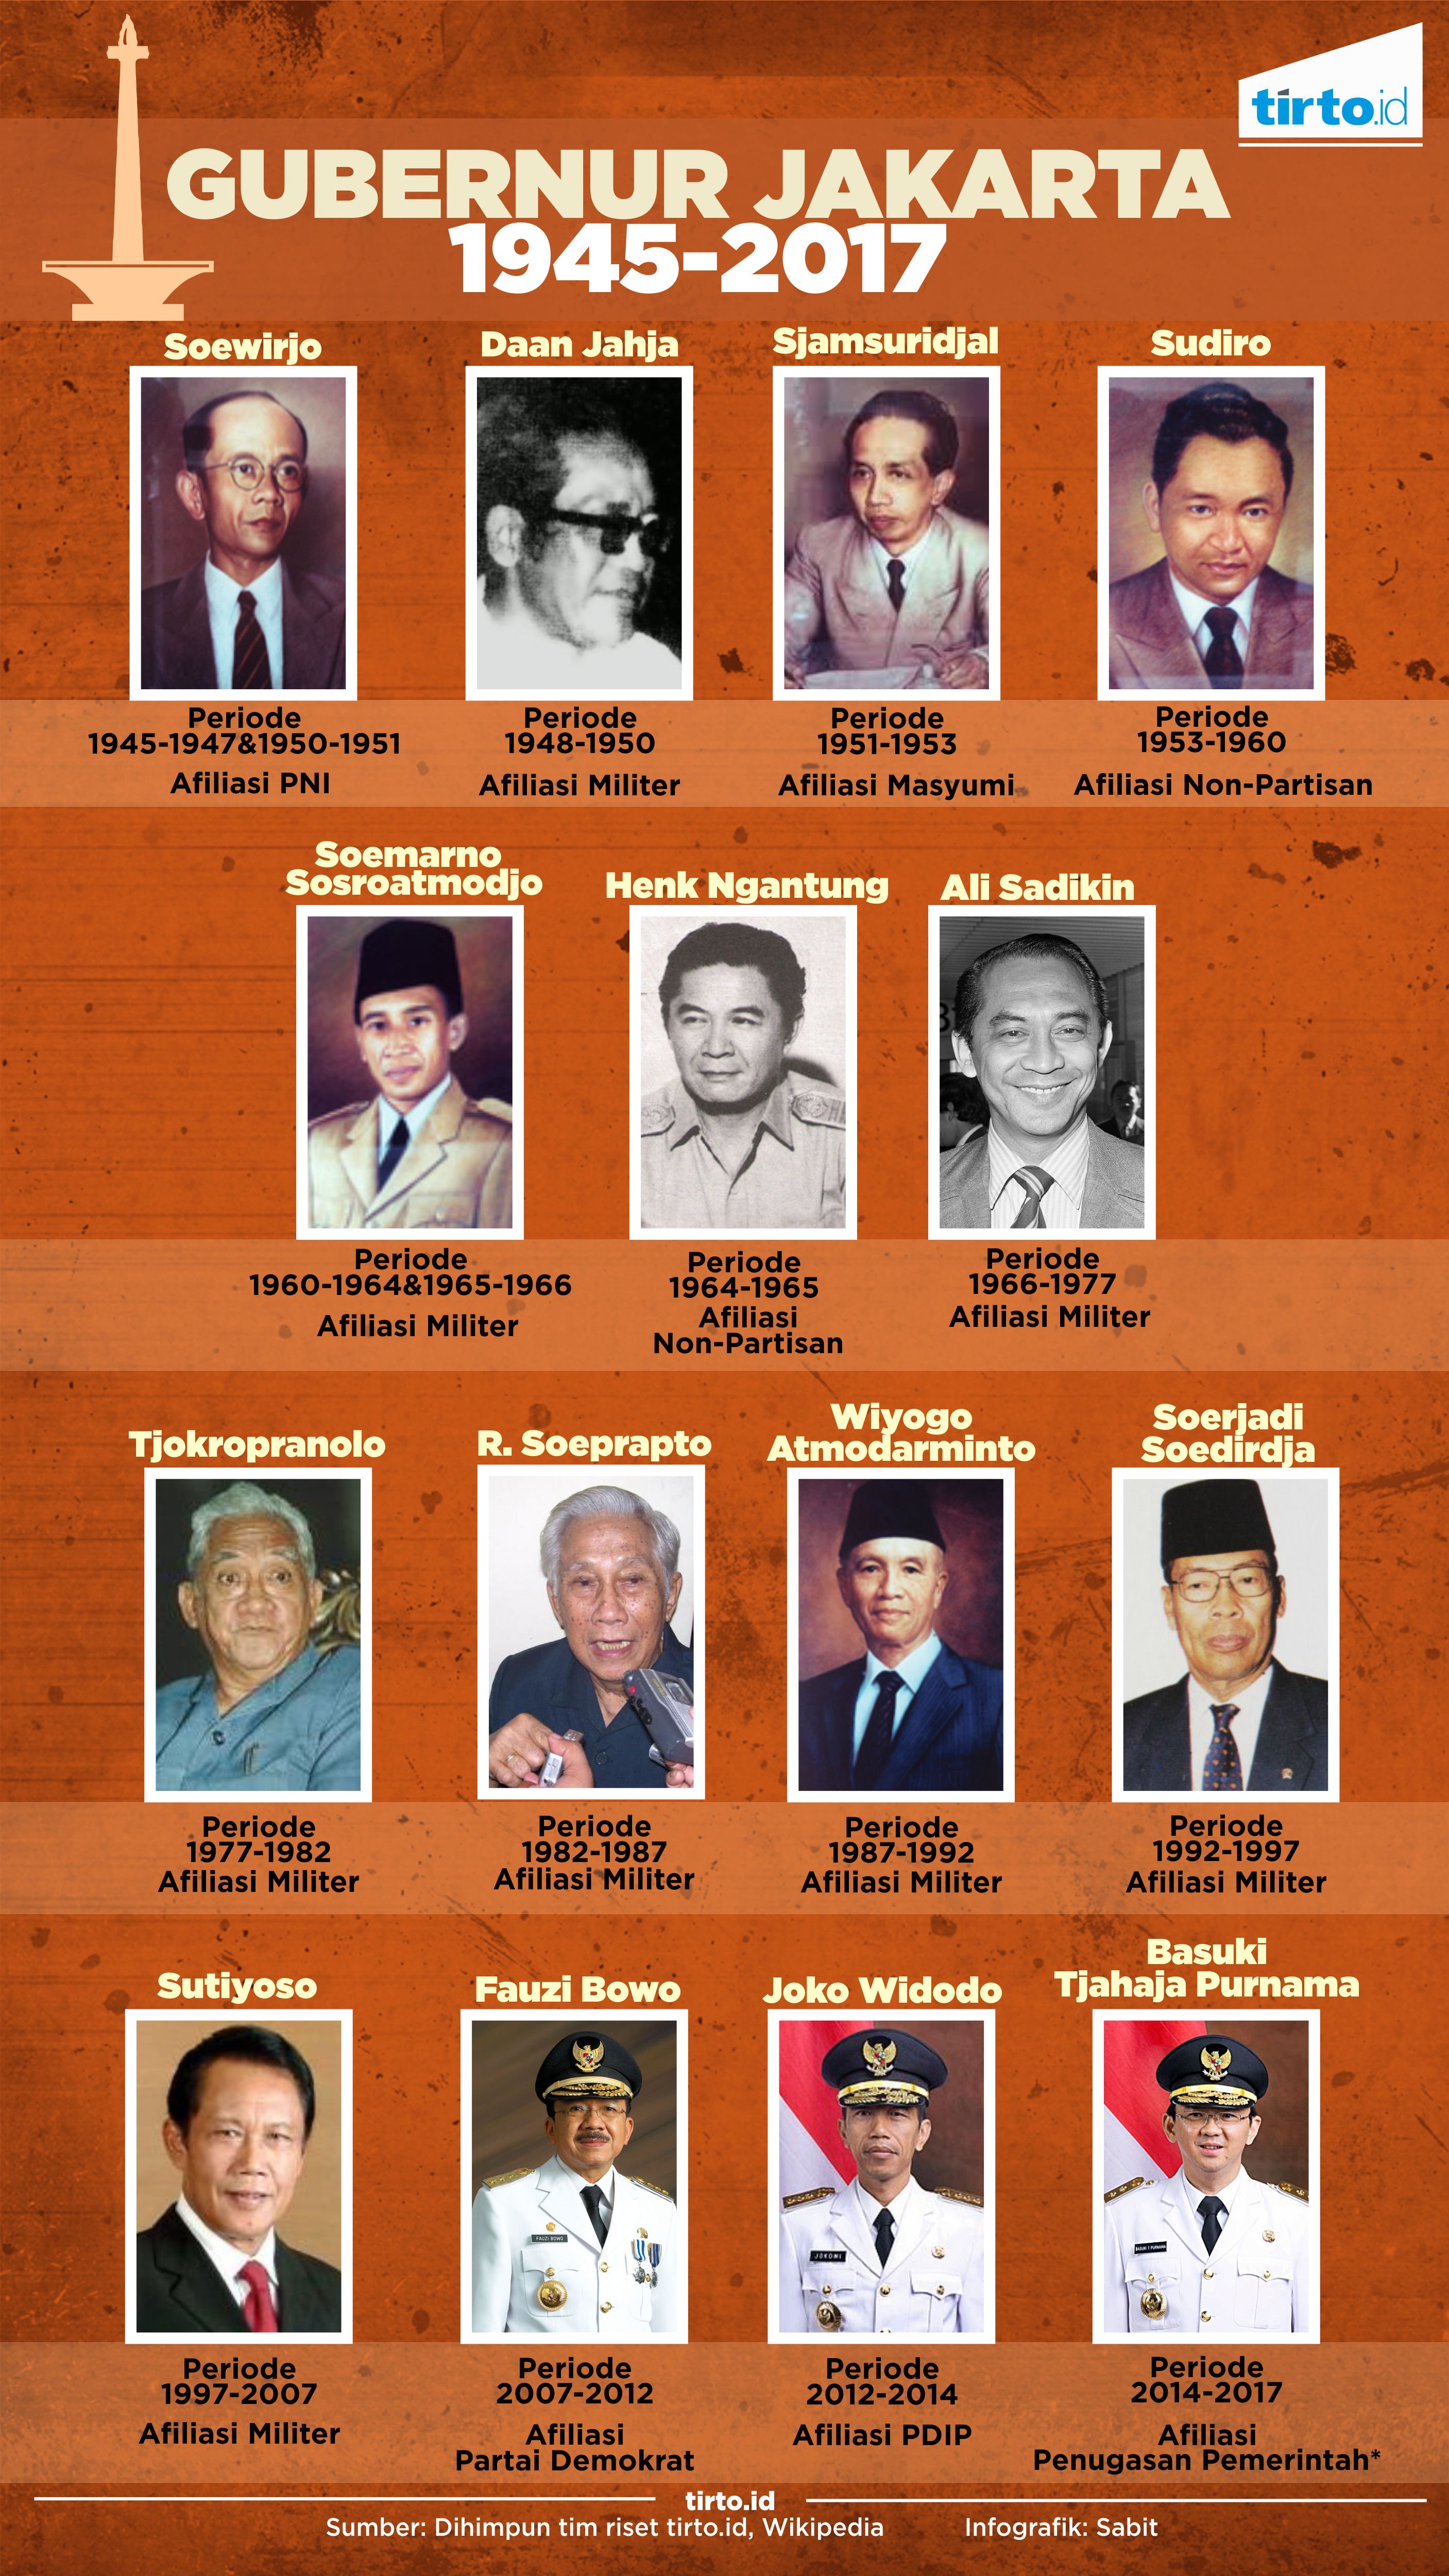 Sjamsuridjal, Gubernur Jakarta Pertama dari Partai Islam